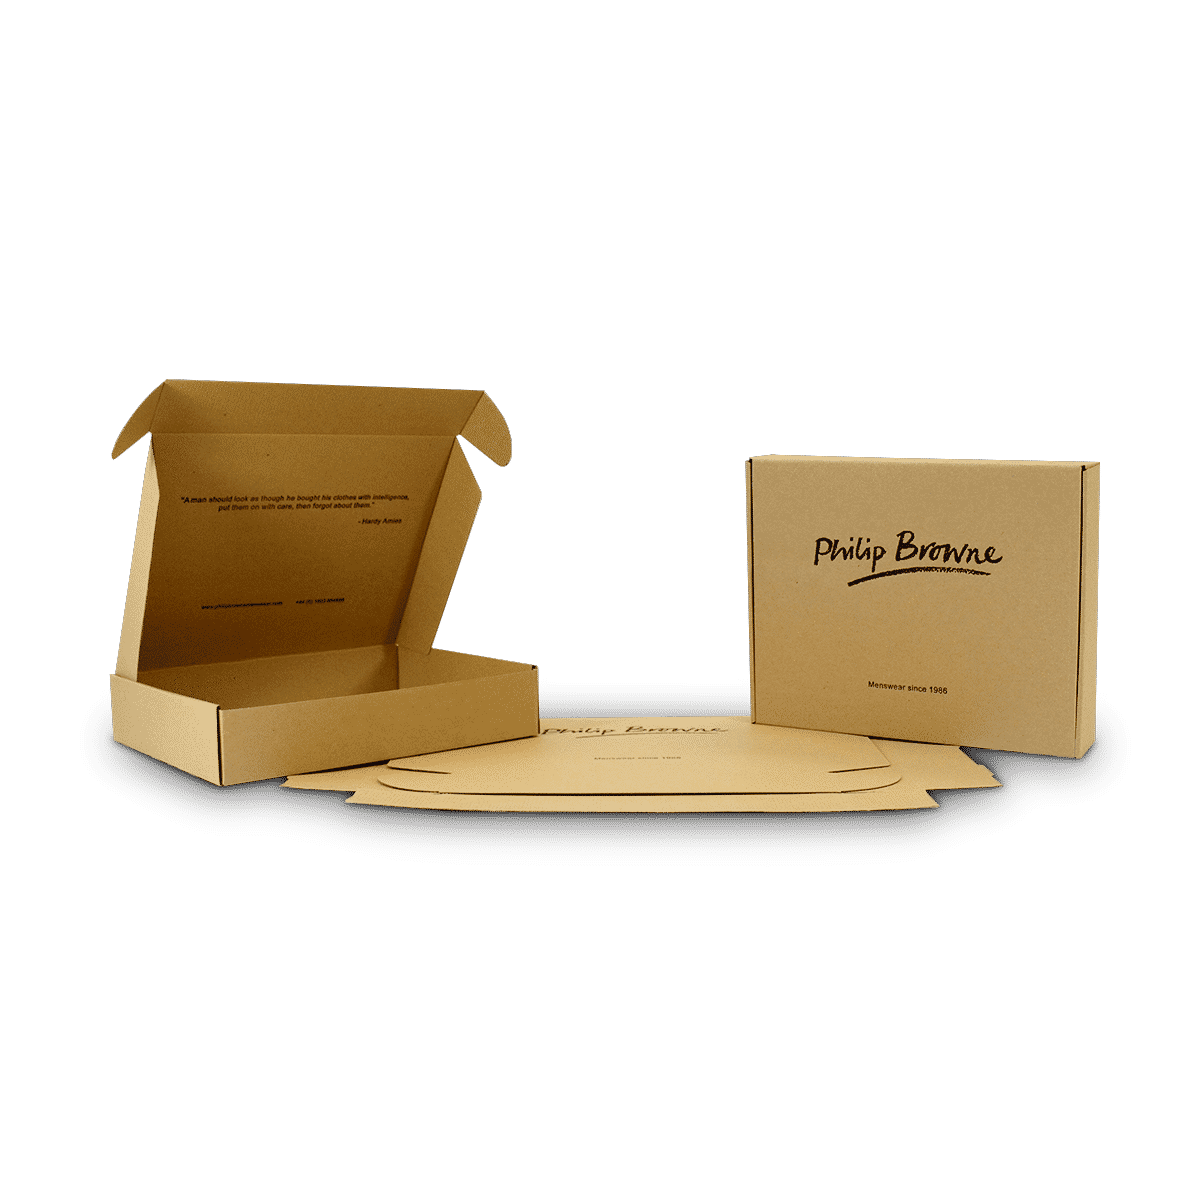 Ecommerce box - Philip Browne